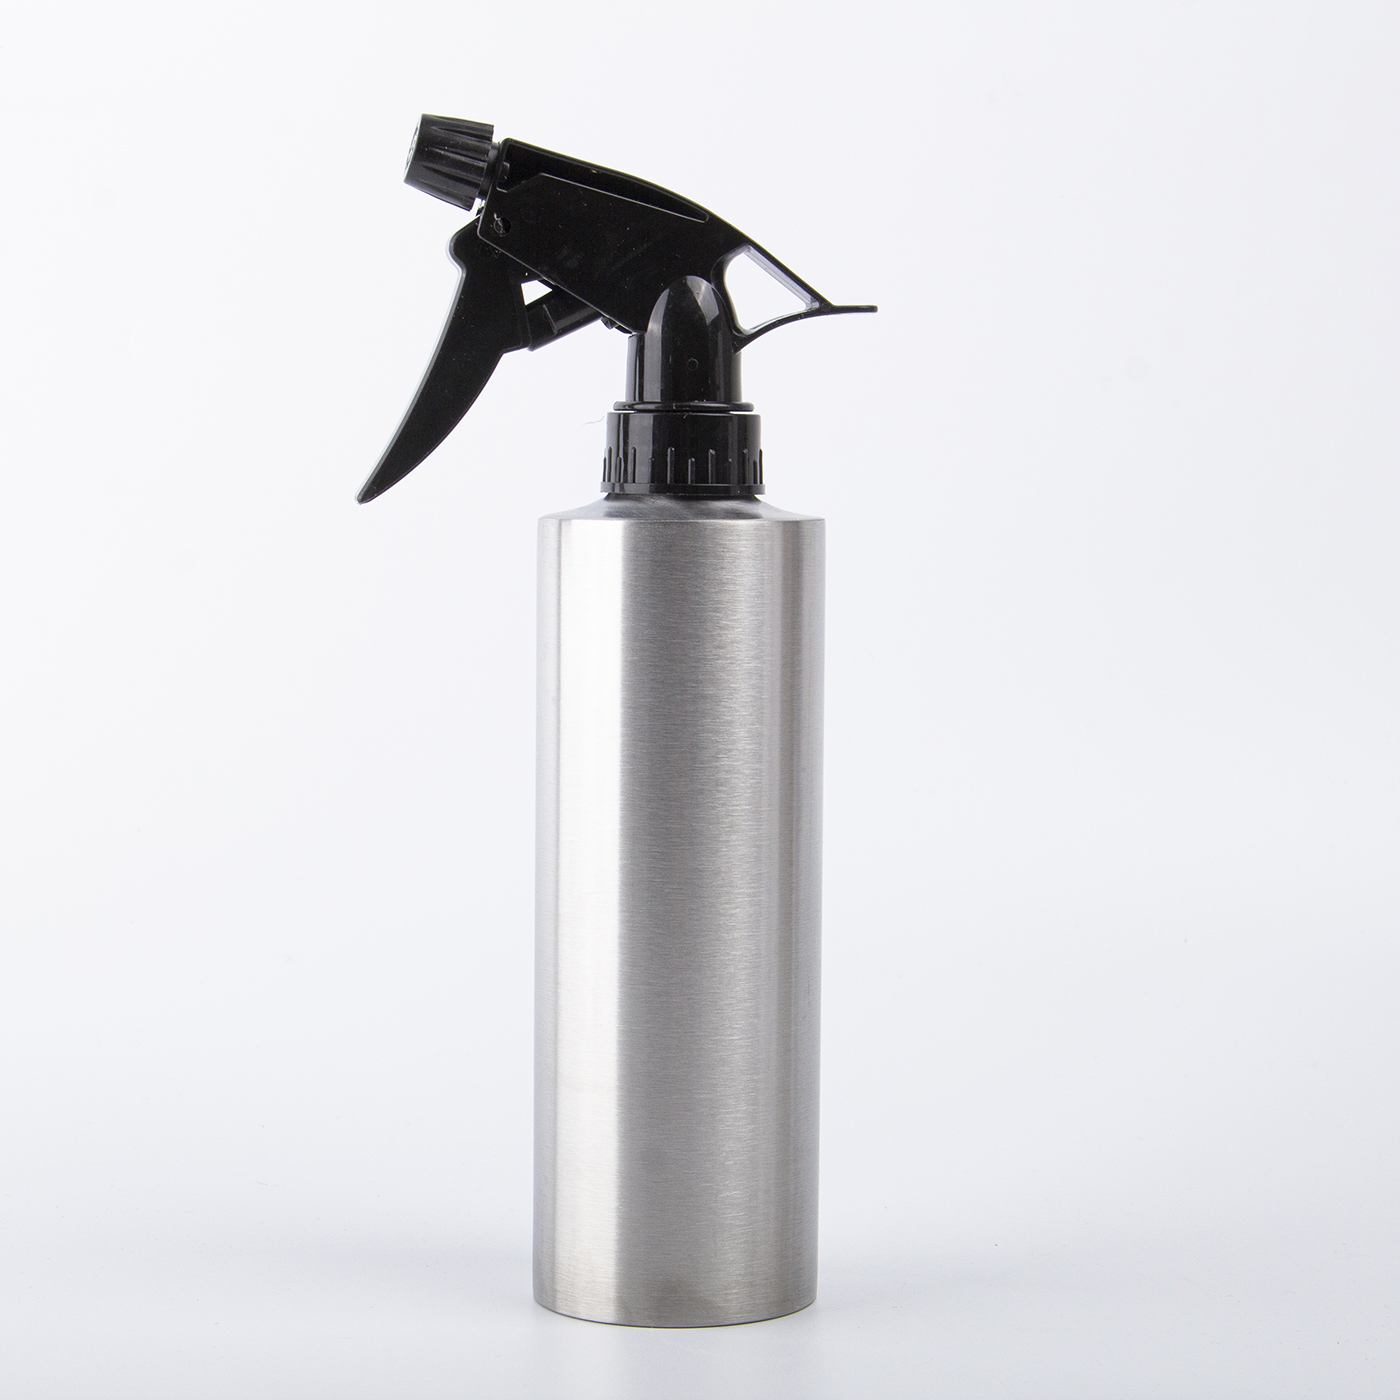 12 oz. Stainless Steel Spray Bottle With Trigger Sprayer3